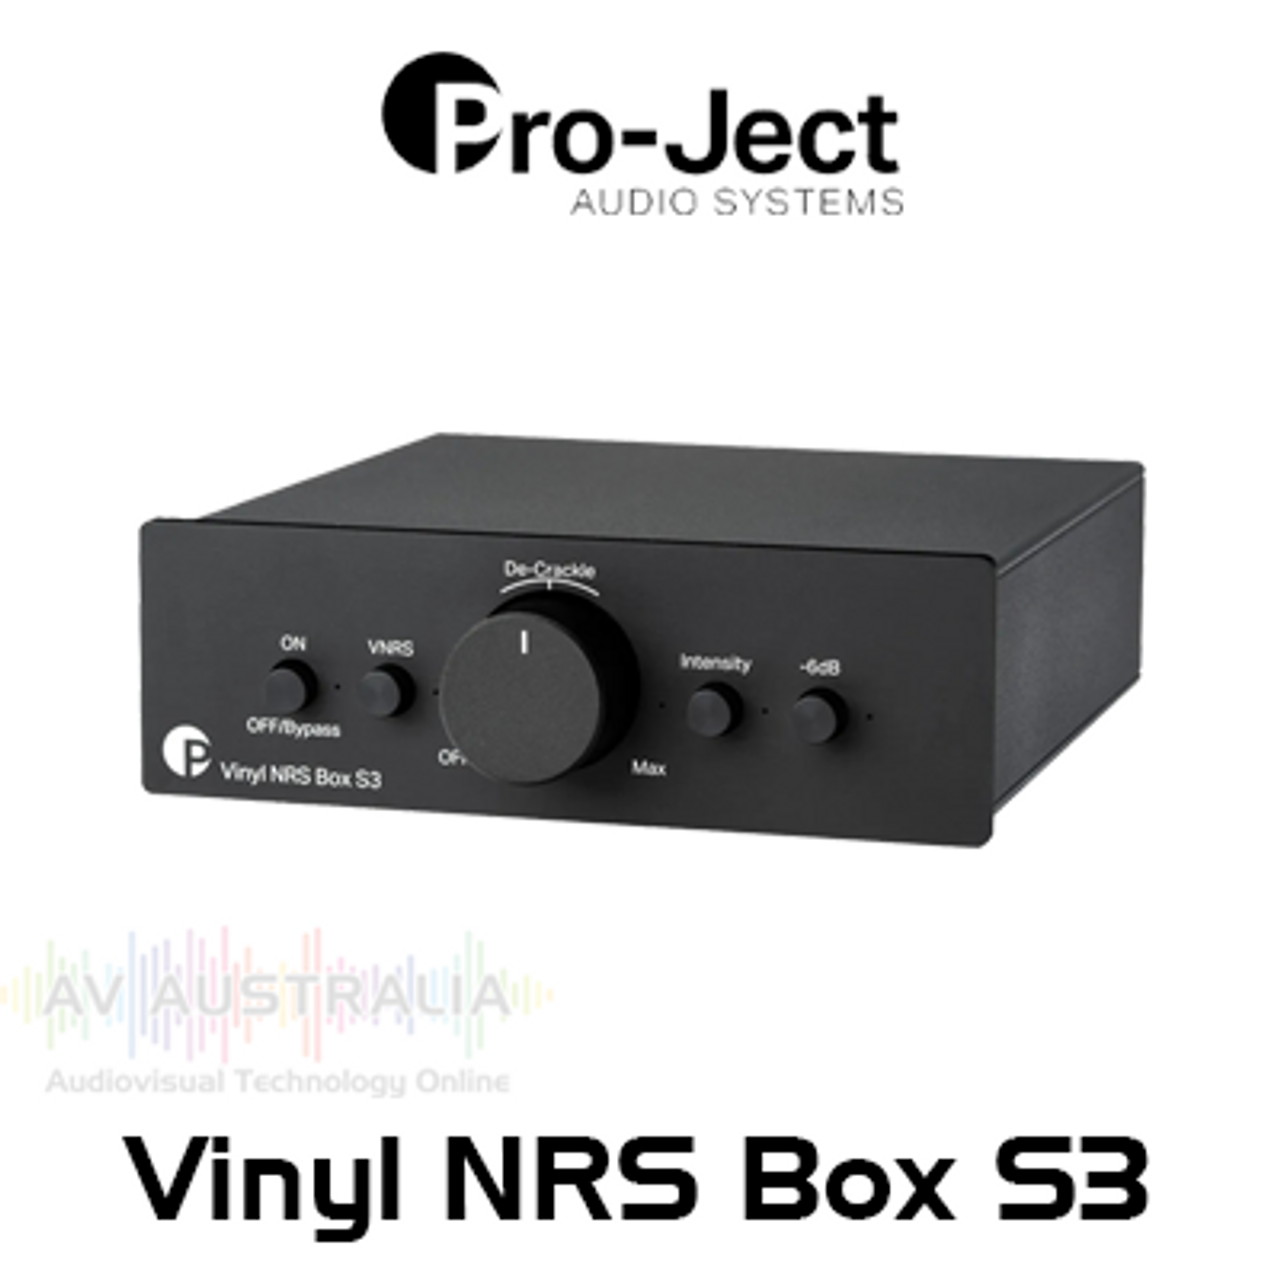 Pro-Ject Vinyl NRS Box S3